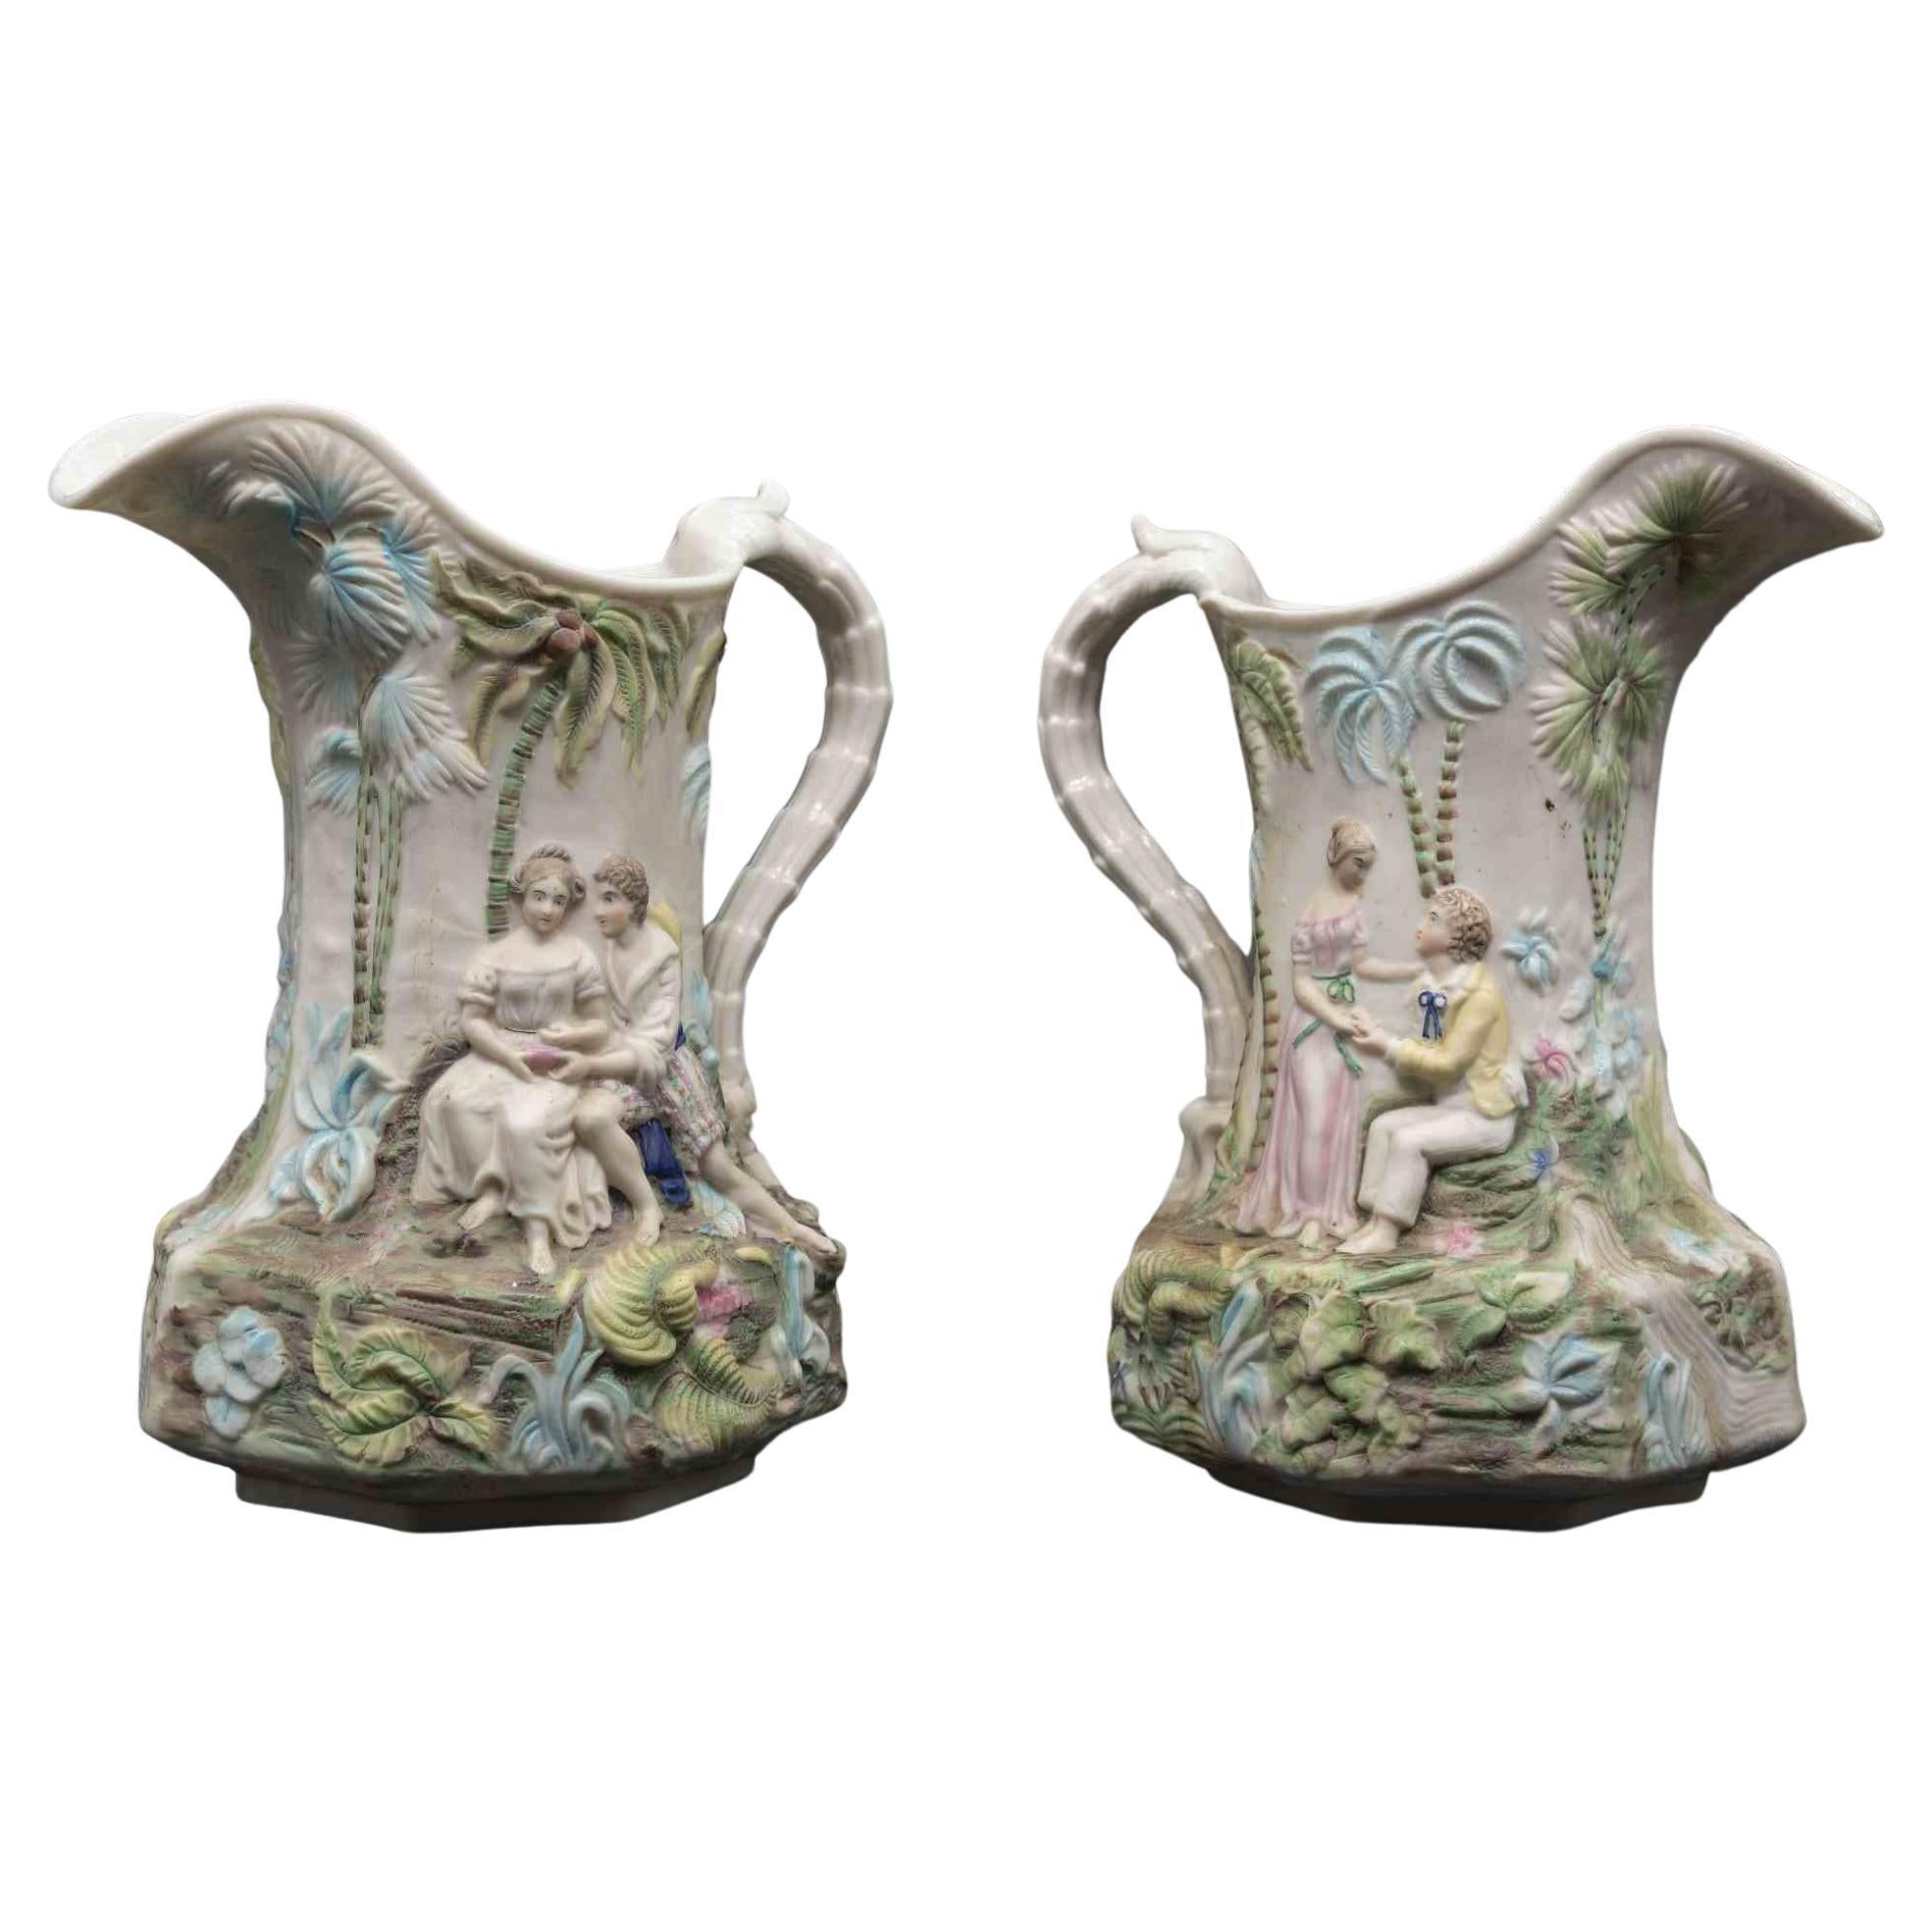 Pair of Ceramic Jugs, Early 20th Century